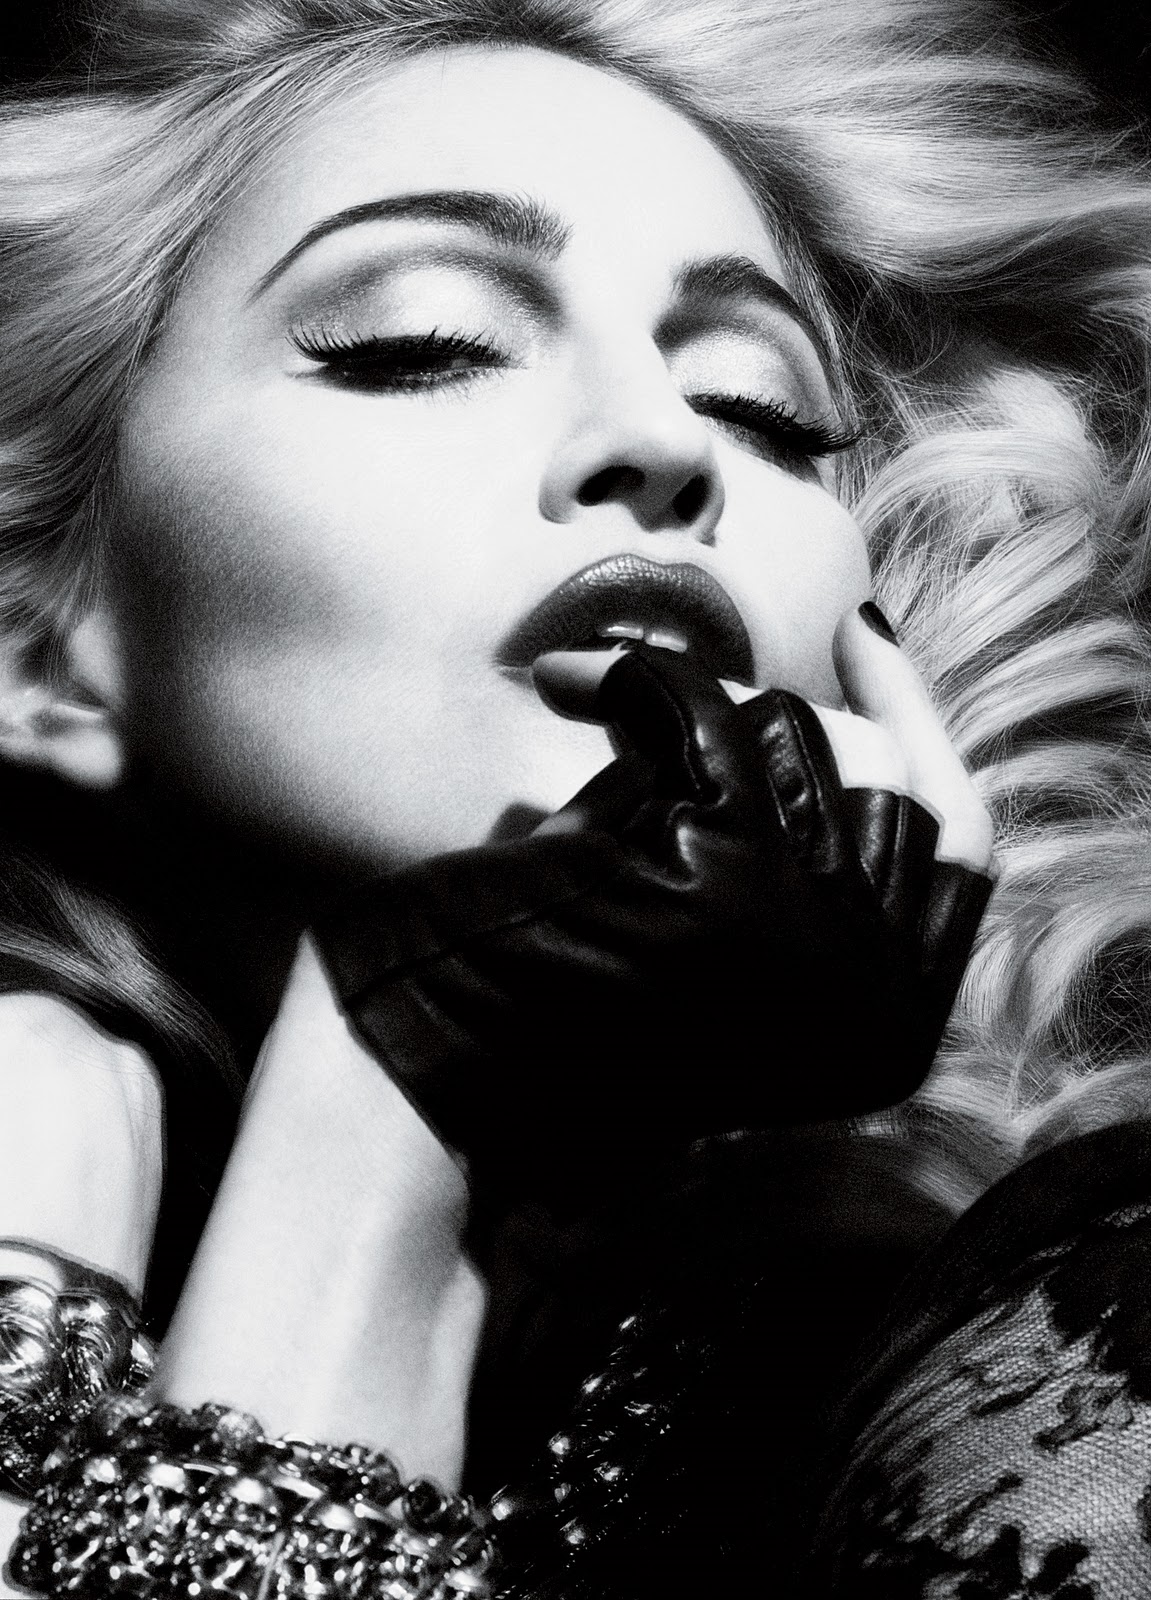 http://4.bp.blogspot.com/_0pynAn-Ksz4/S9_f8R-8_0I/AAAAAAAAJEk/60SgEm3_V2I/s1600/2010+-+Madonna+by+Alas+&amp;+Piggott+for+Interview+-+02.jpg